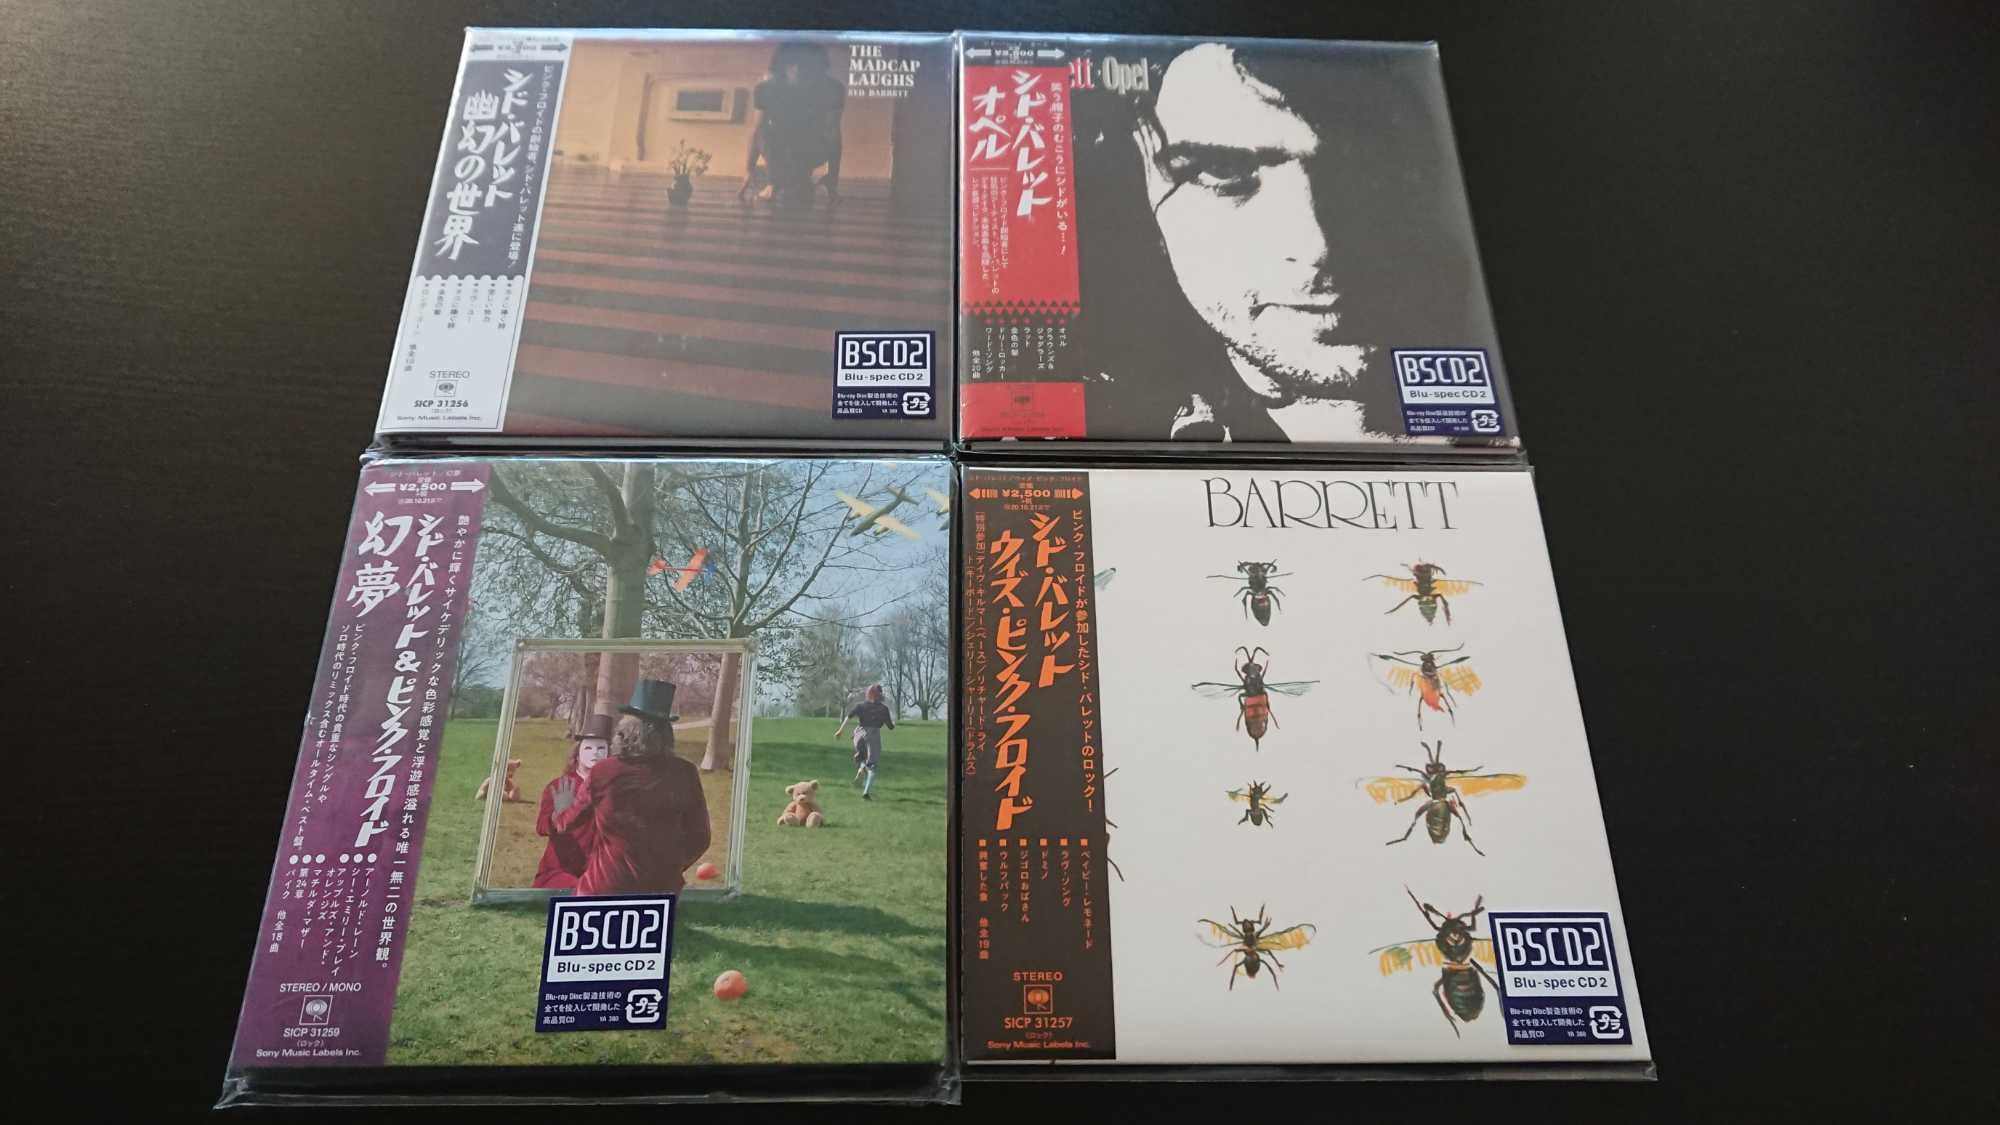 Syd Barrett 4CD Japan Version Folia *Blu-Spec CD2* Pink Floyd 2020